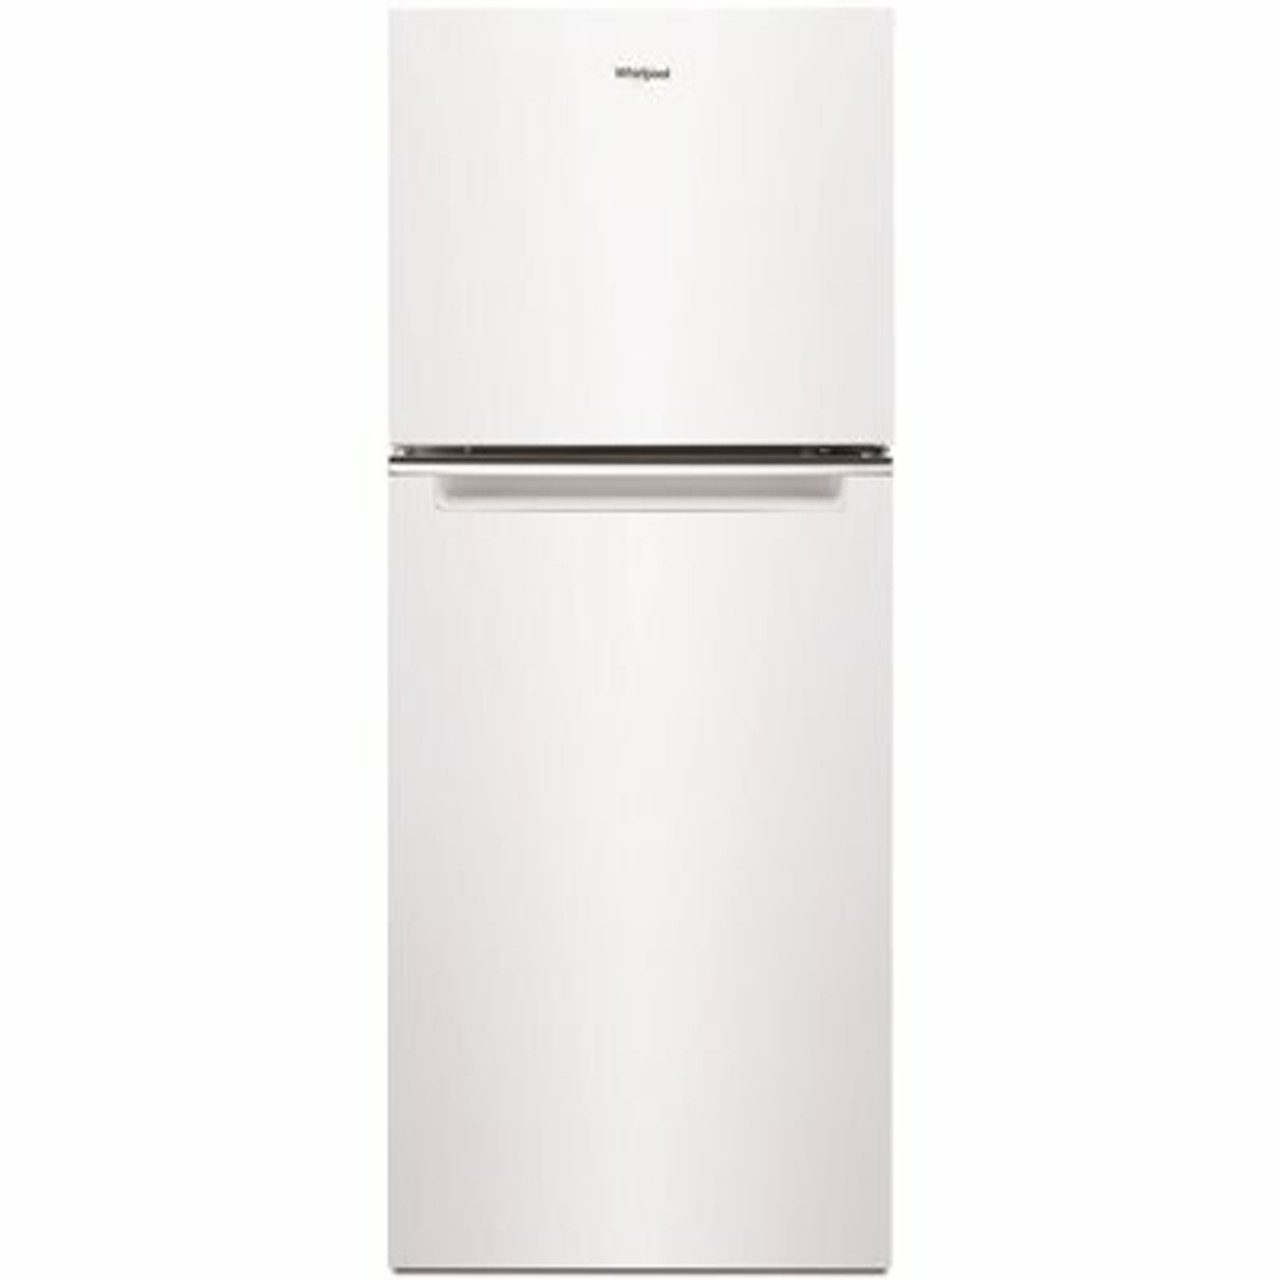 Whirlpool 11.6 Cu. Ft. Top Freezer Refrigerator In White, Counter Depth